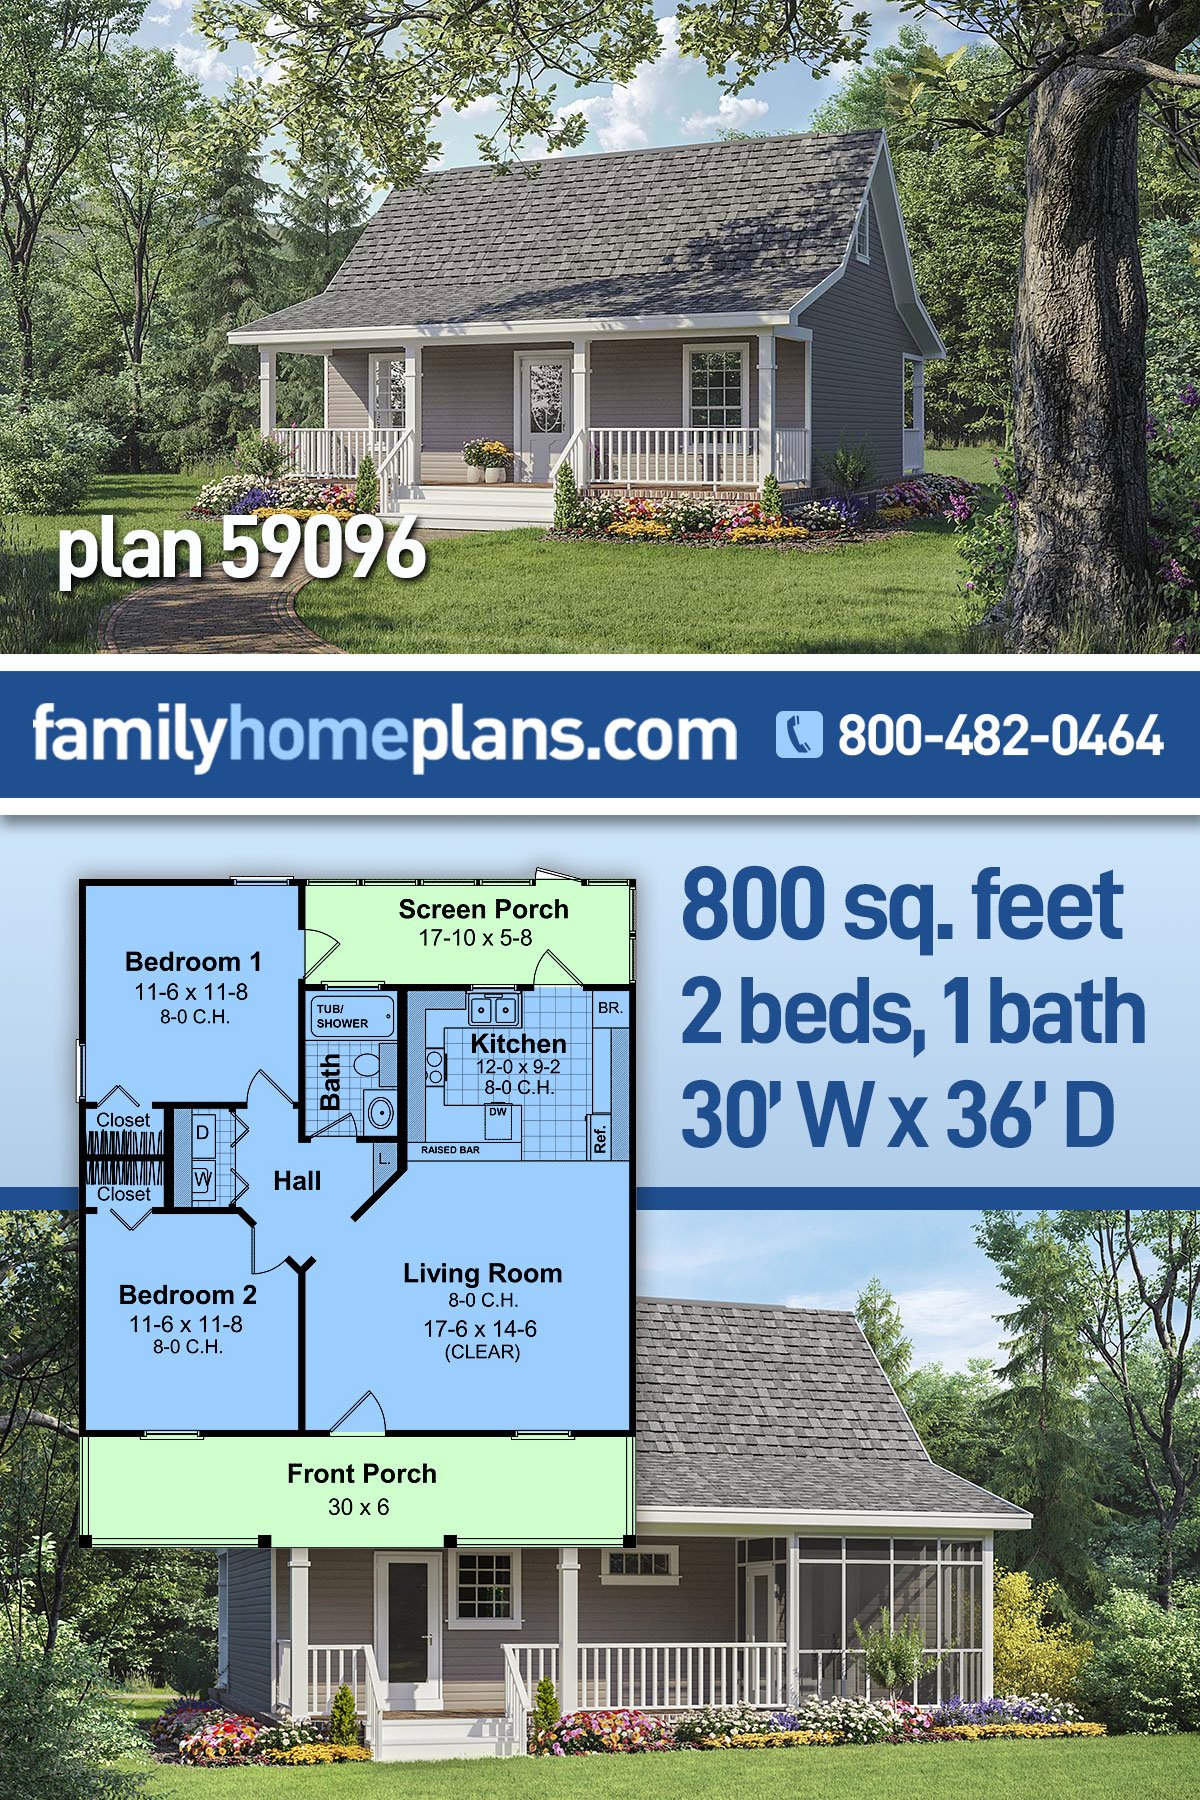 House Plan 59096